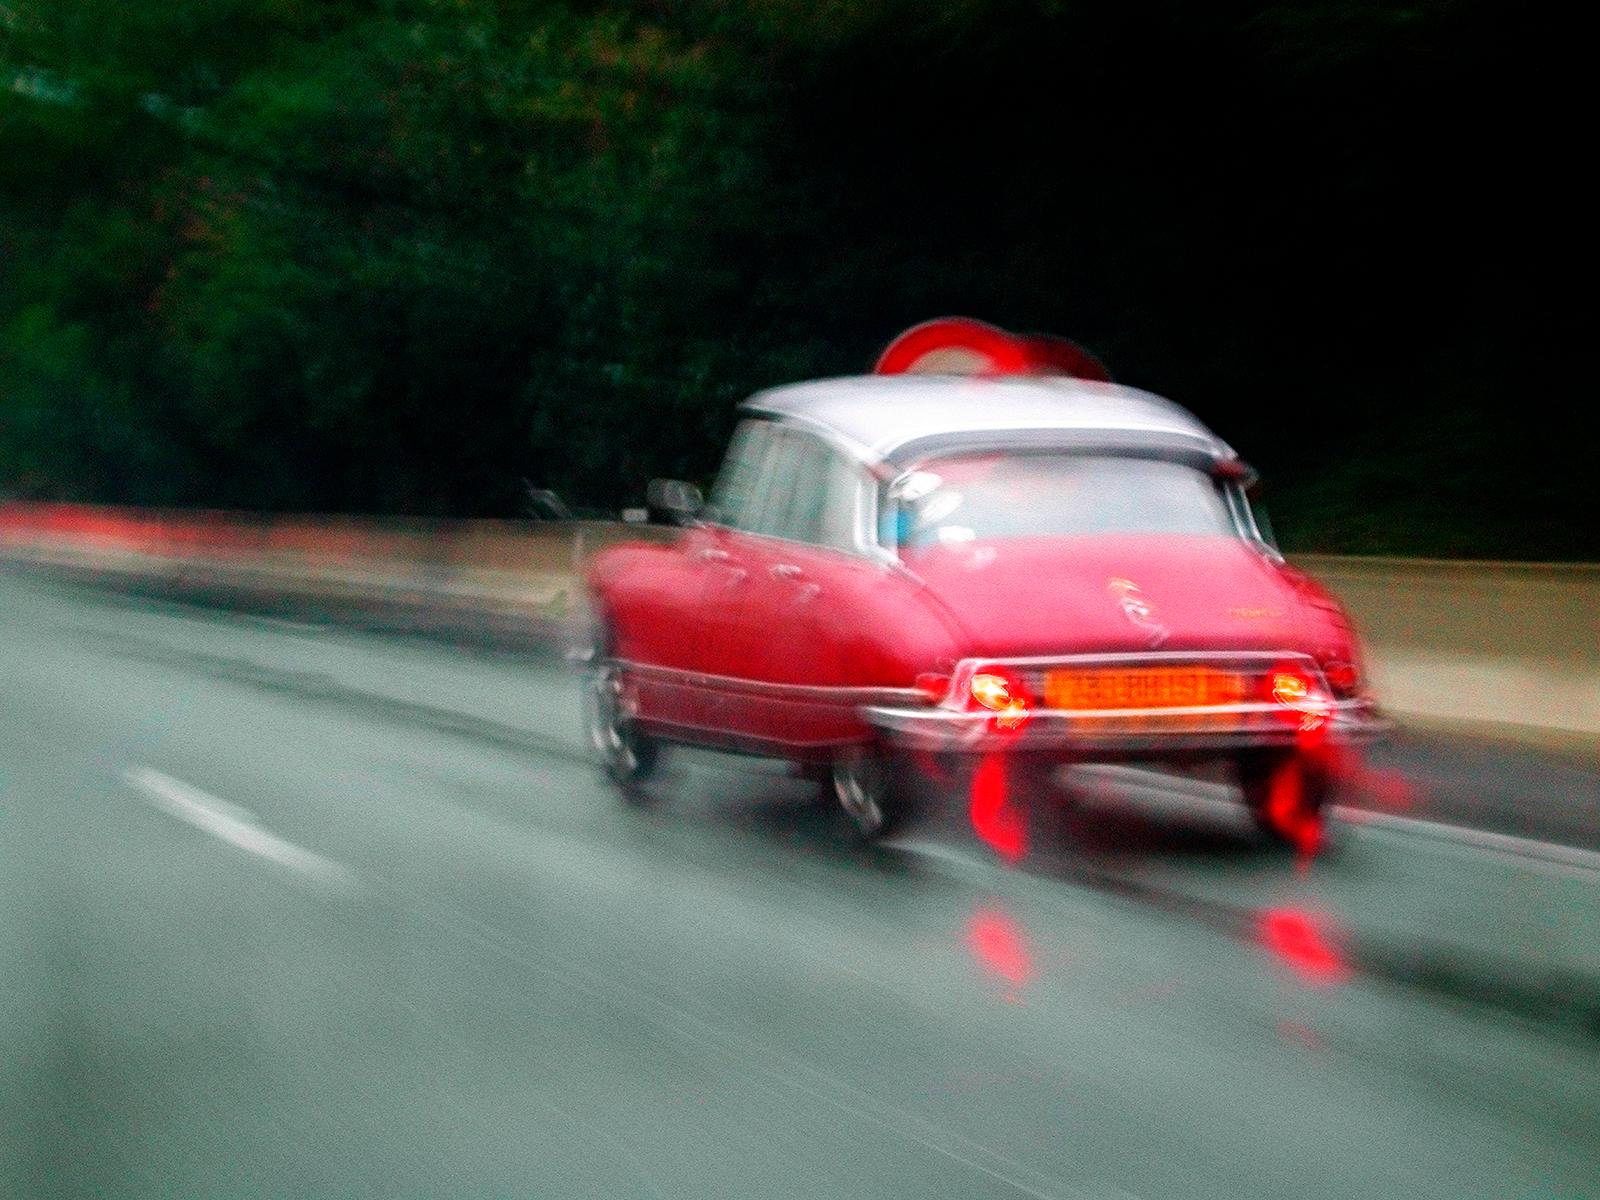 Citroen - Signed limited edition fine art print, Large format, red vintage car 